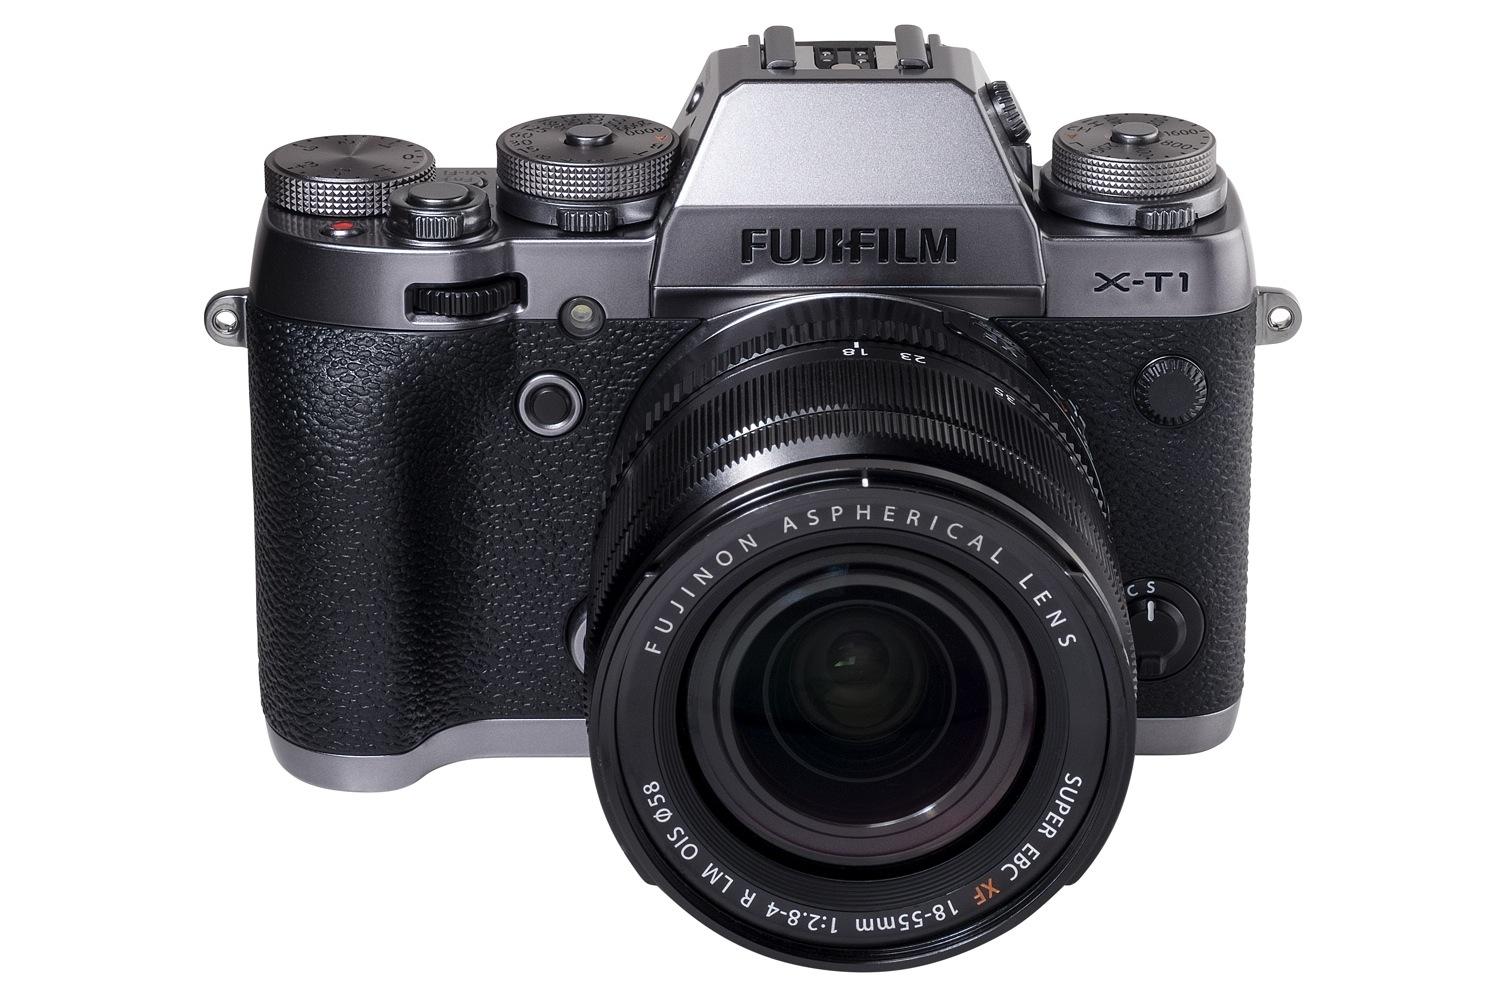 Fujifilm X-T1 Receives a Limited Edition Graphite Silver Body 